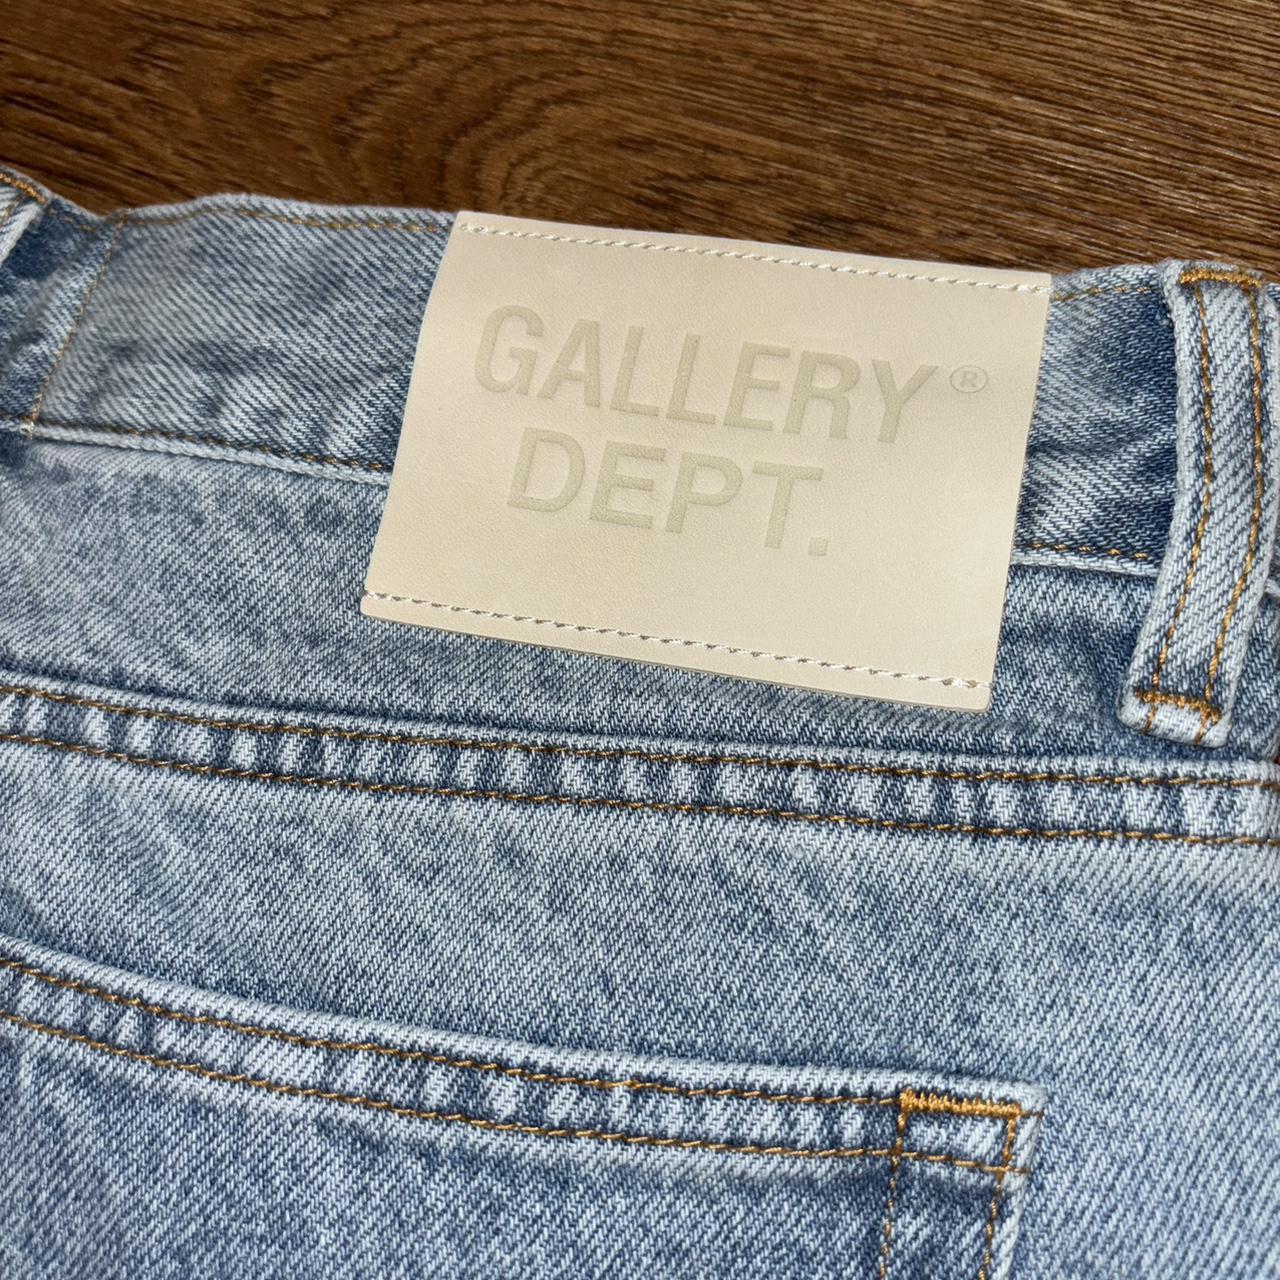 Gallery Department jeans 30” - Depop